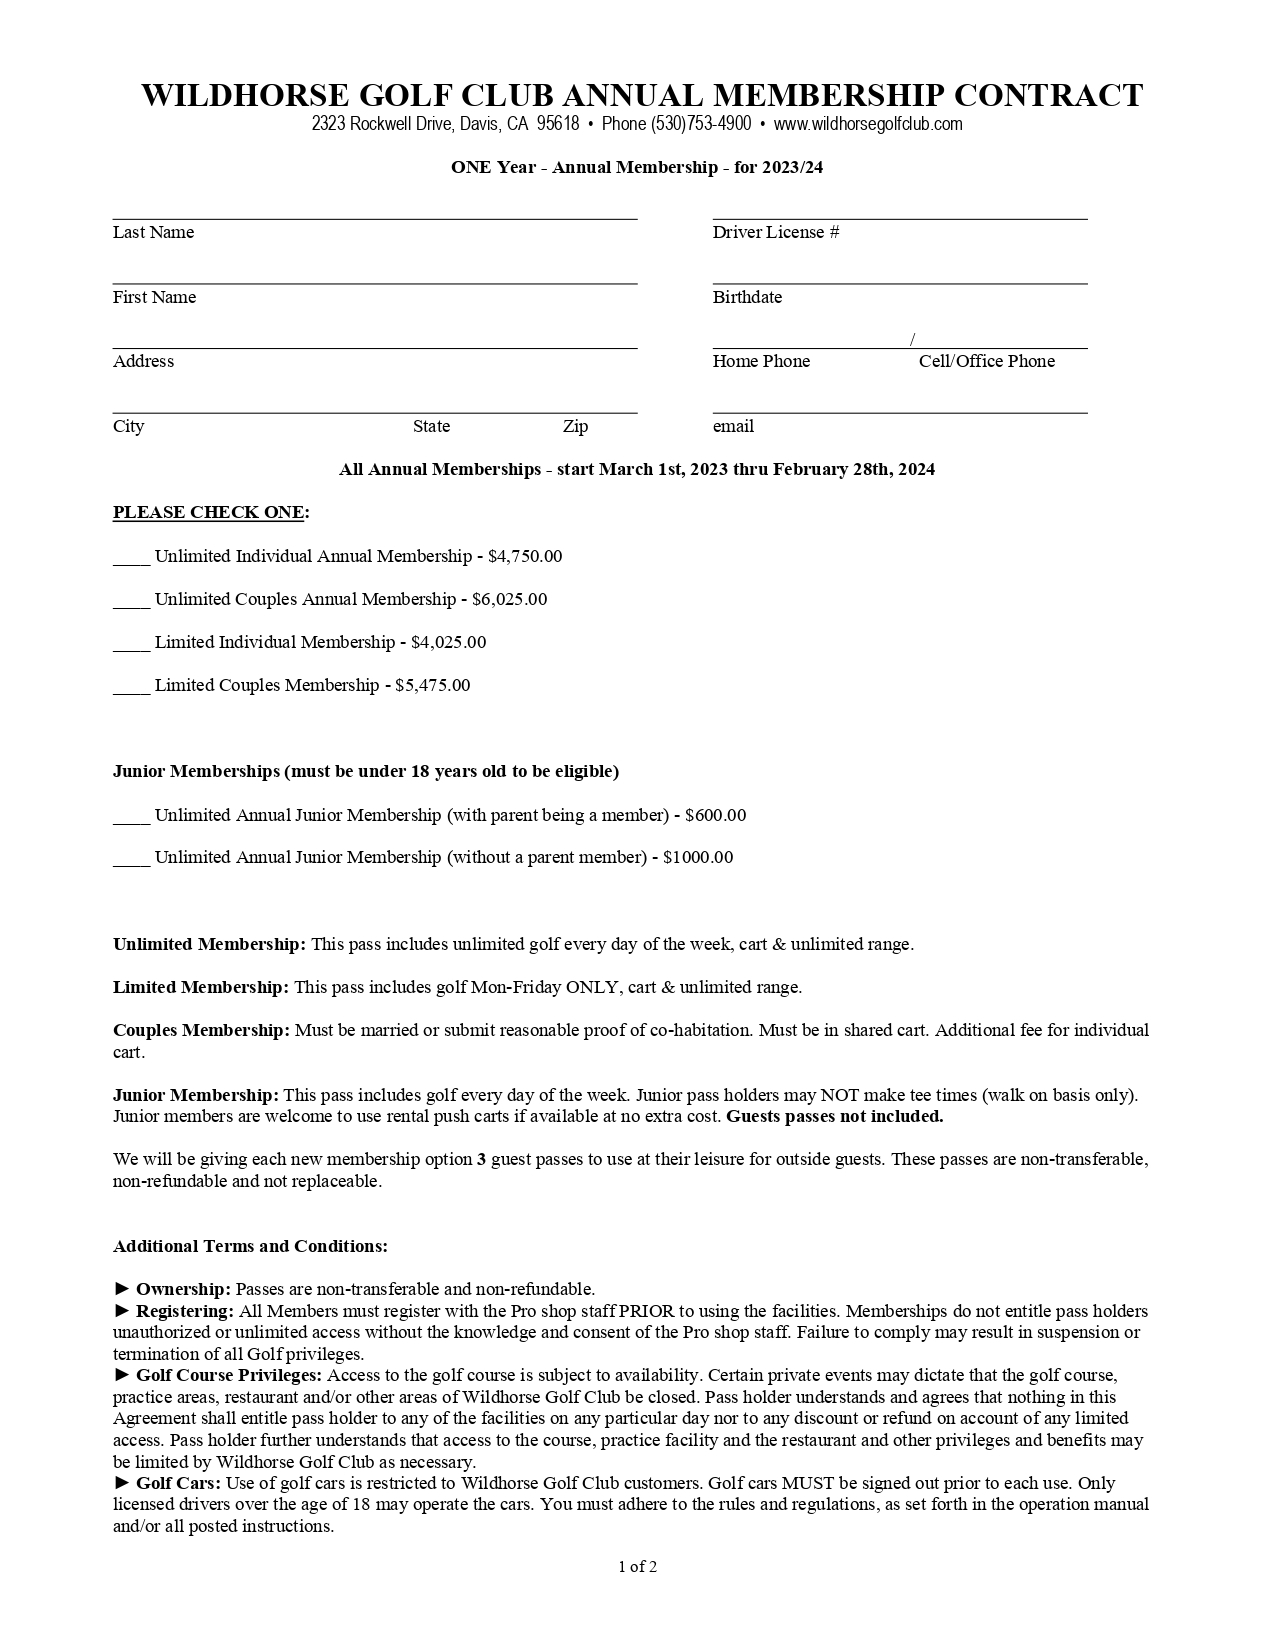 Wildhorse Golf Club | Golf Memberships - (2023-24) Annual Membership Contract (Page #1)